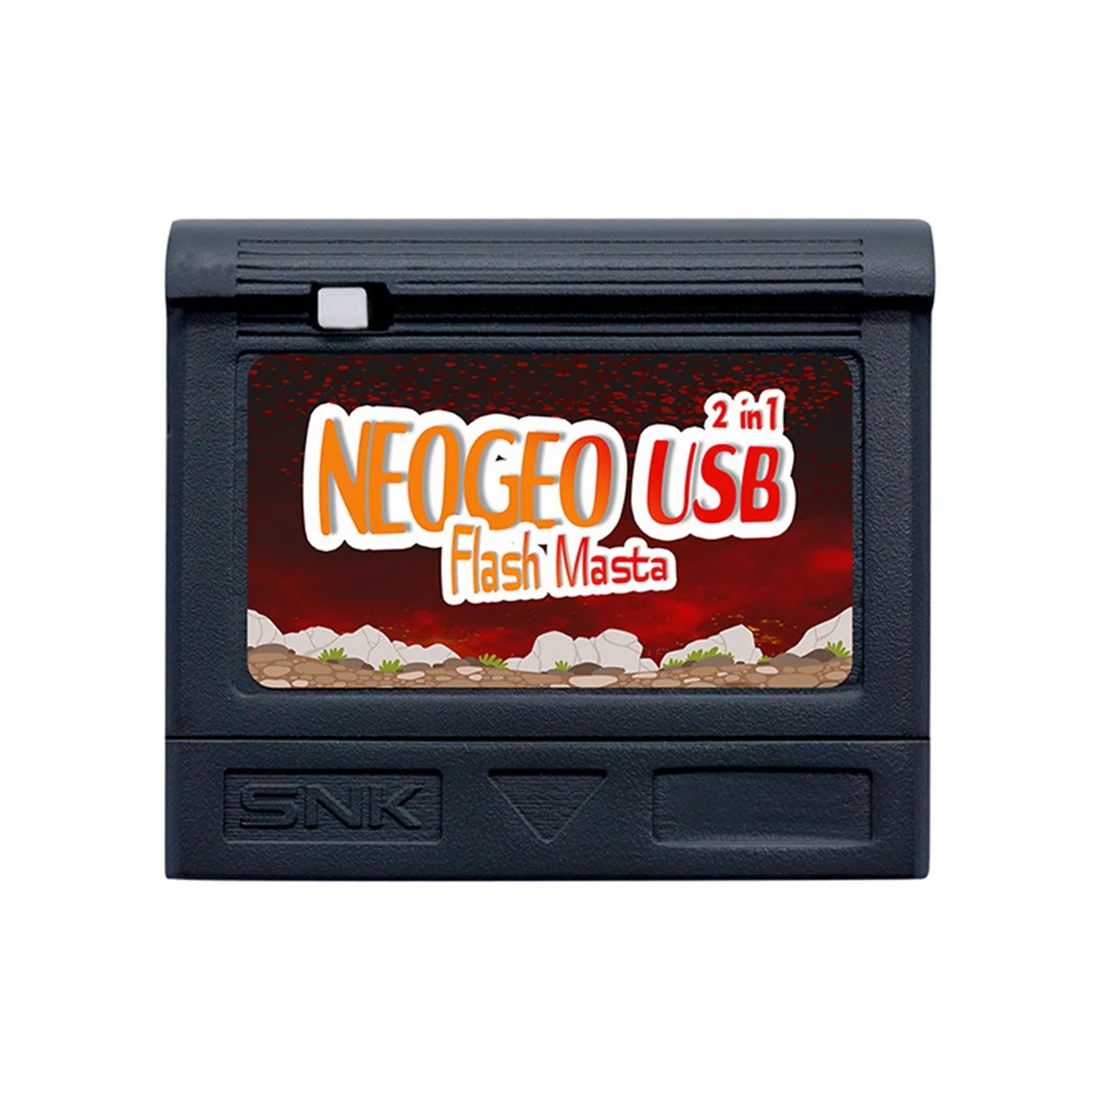 For SNK NEO NGP NGPC Burning Card NEOGEO USB Flash Masta 2 in 1 Retro Game Accessories-Black